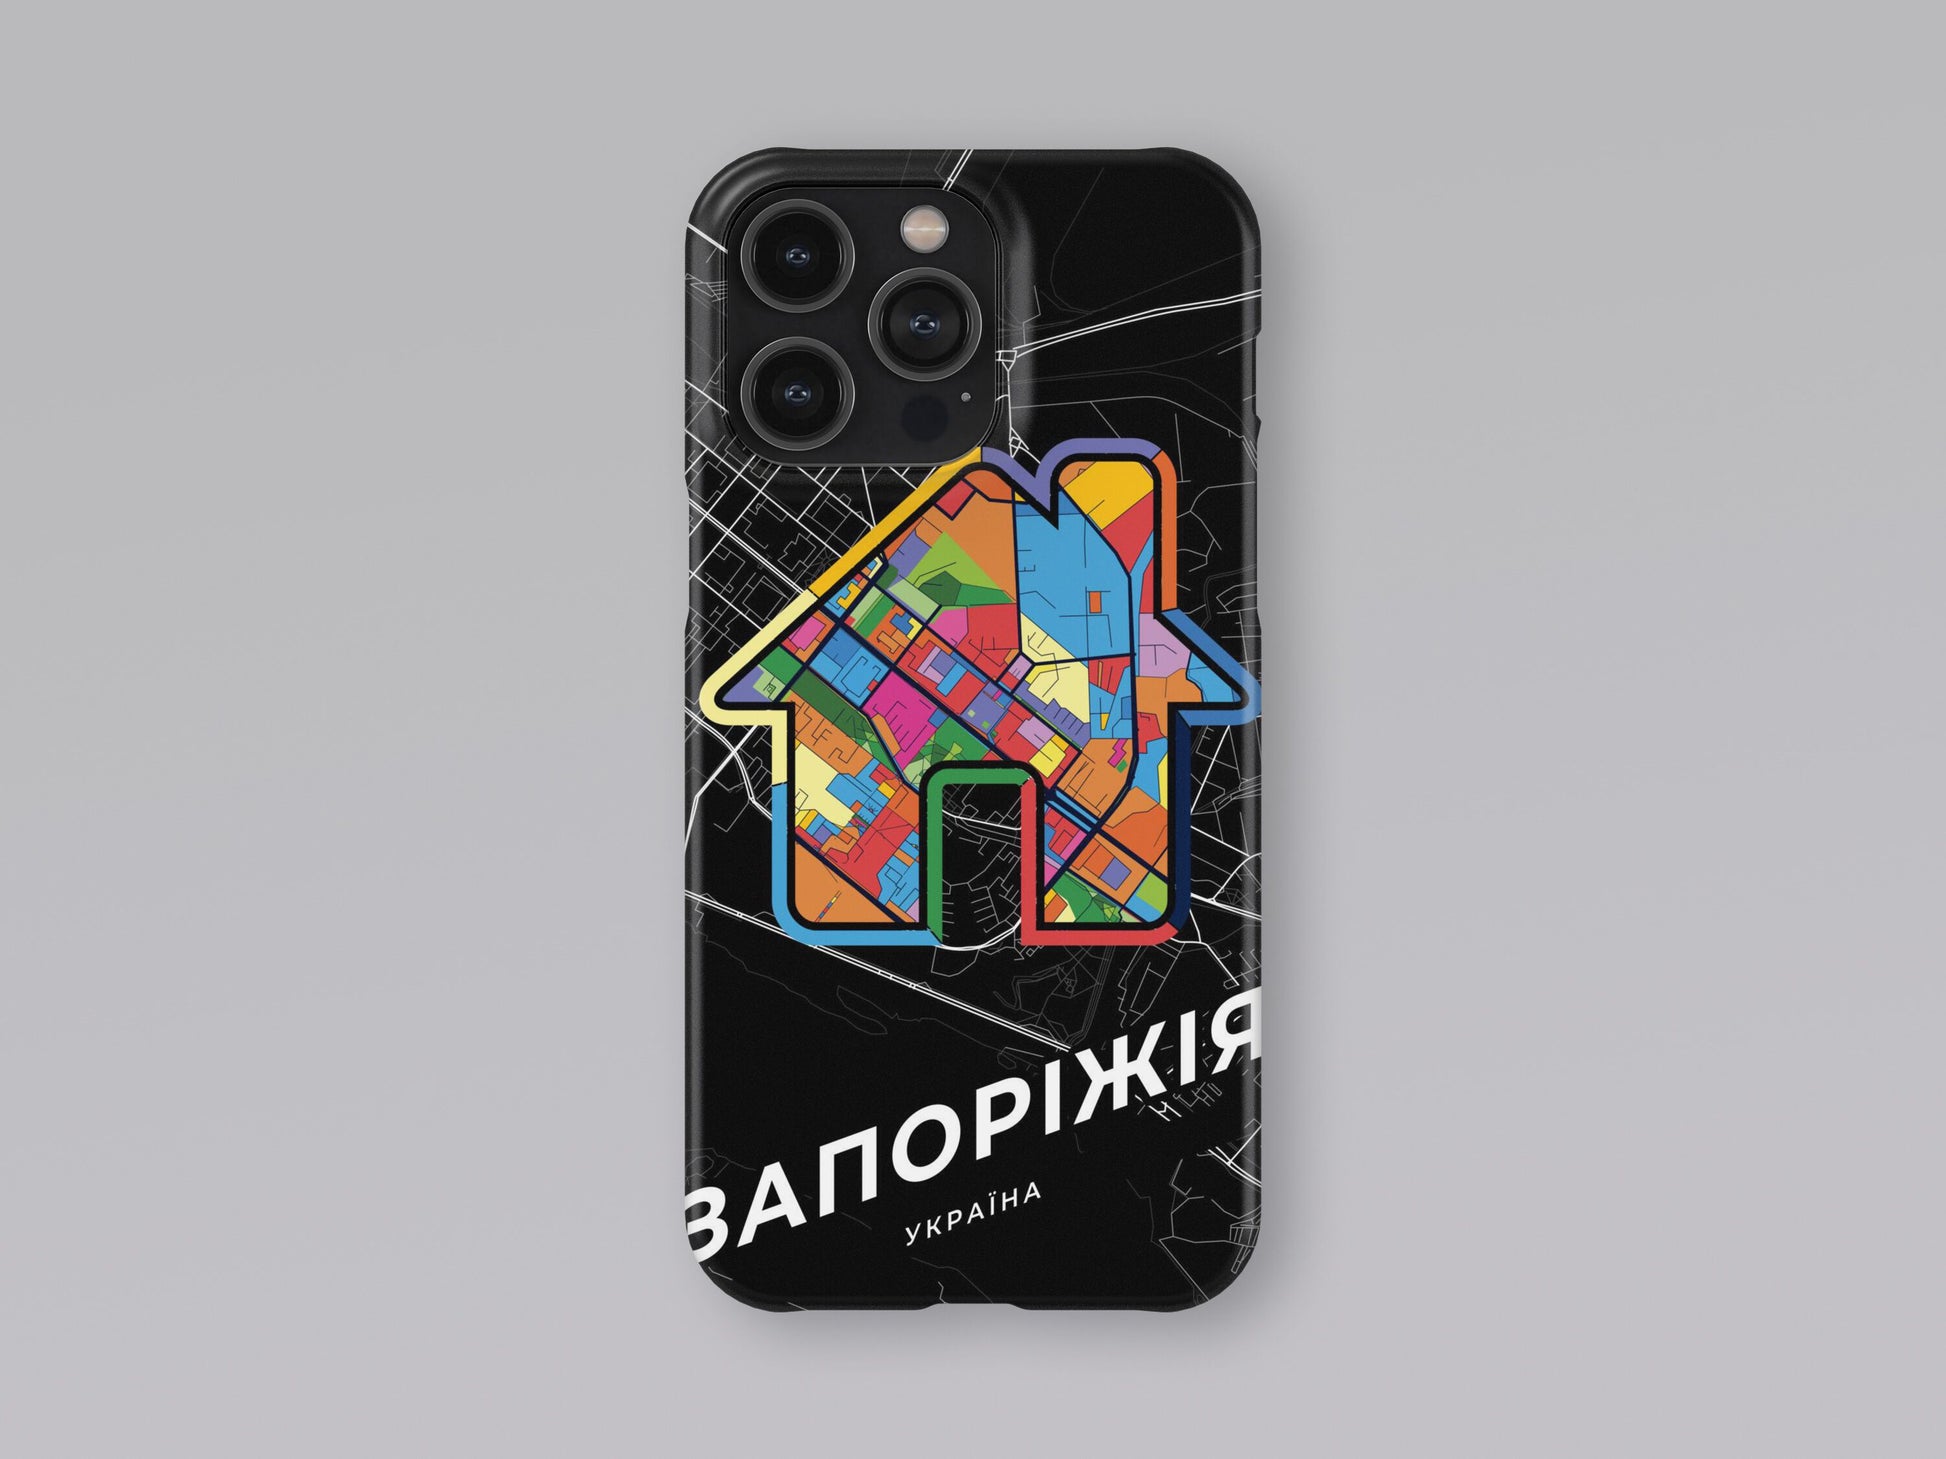 Zaporizhia Ukraine slim phone case with colorful icon 3